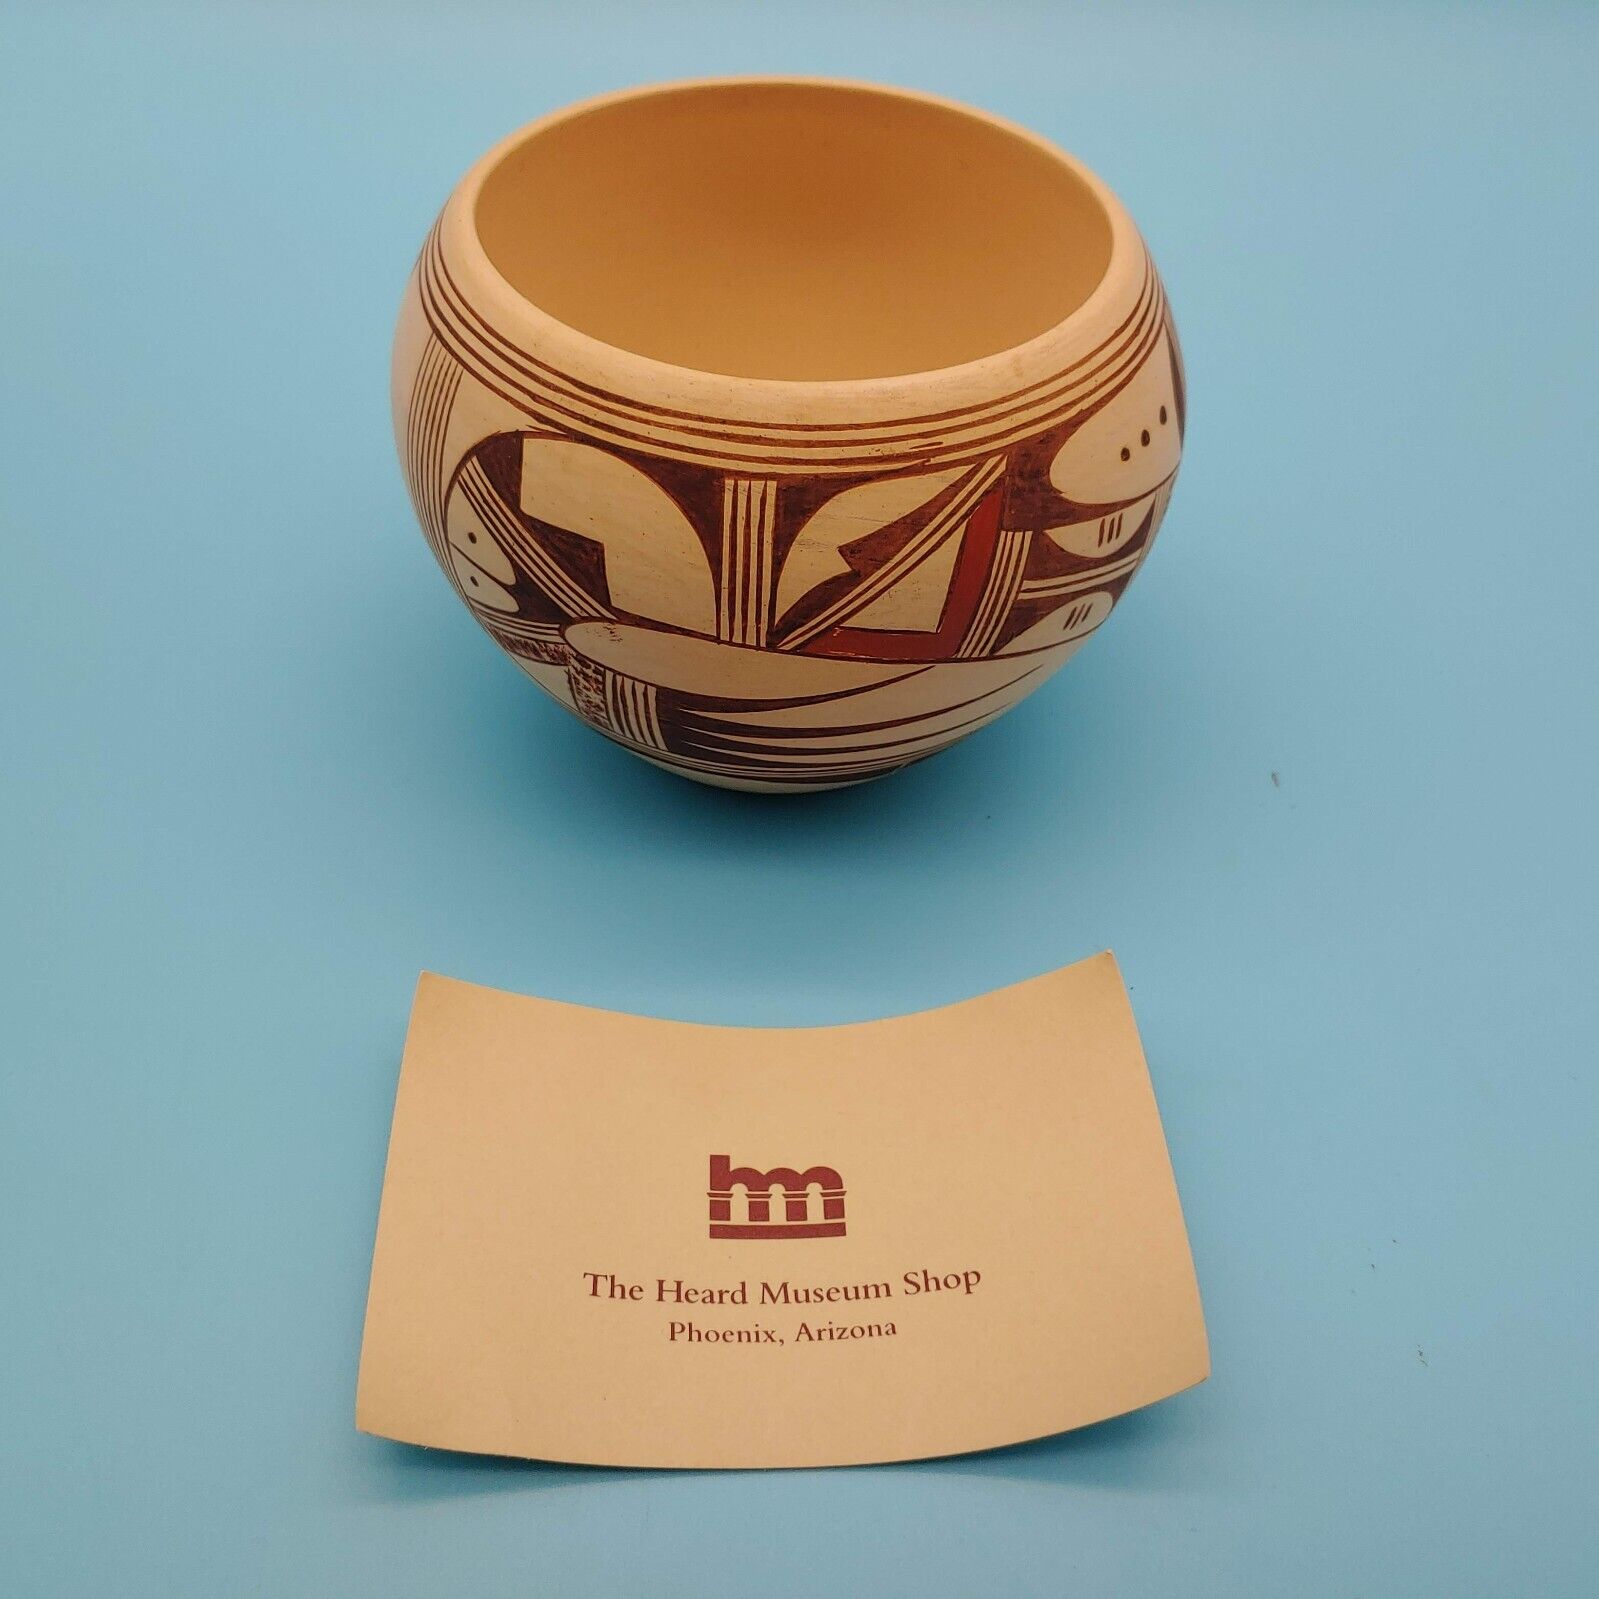 Native American HOPI Pottery Vase Signed Rozelda / Heard Museum Shop